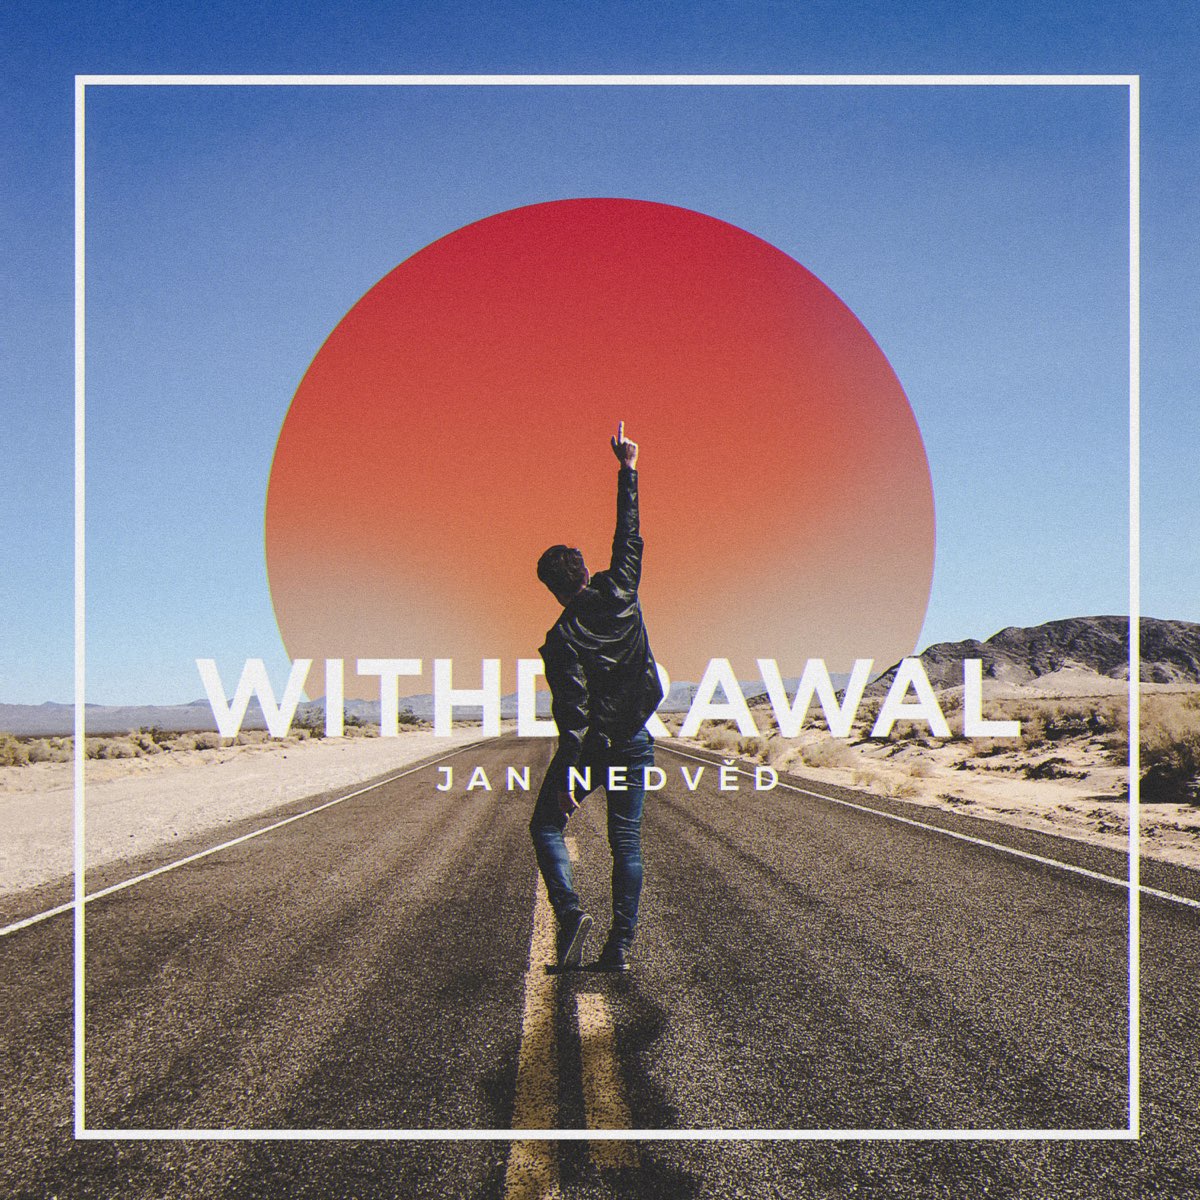 Withdrawal - Single by Jan Nedvěd on Apple Music